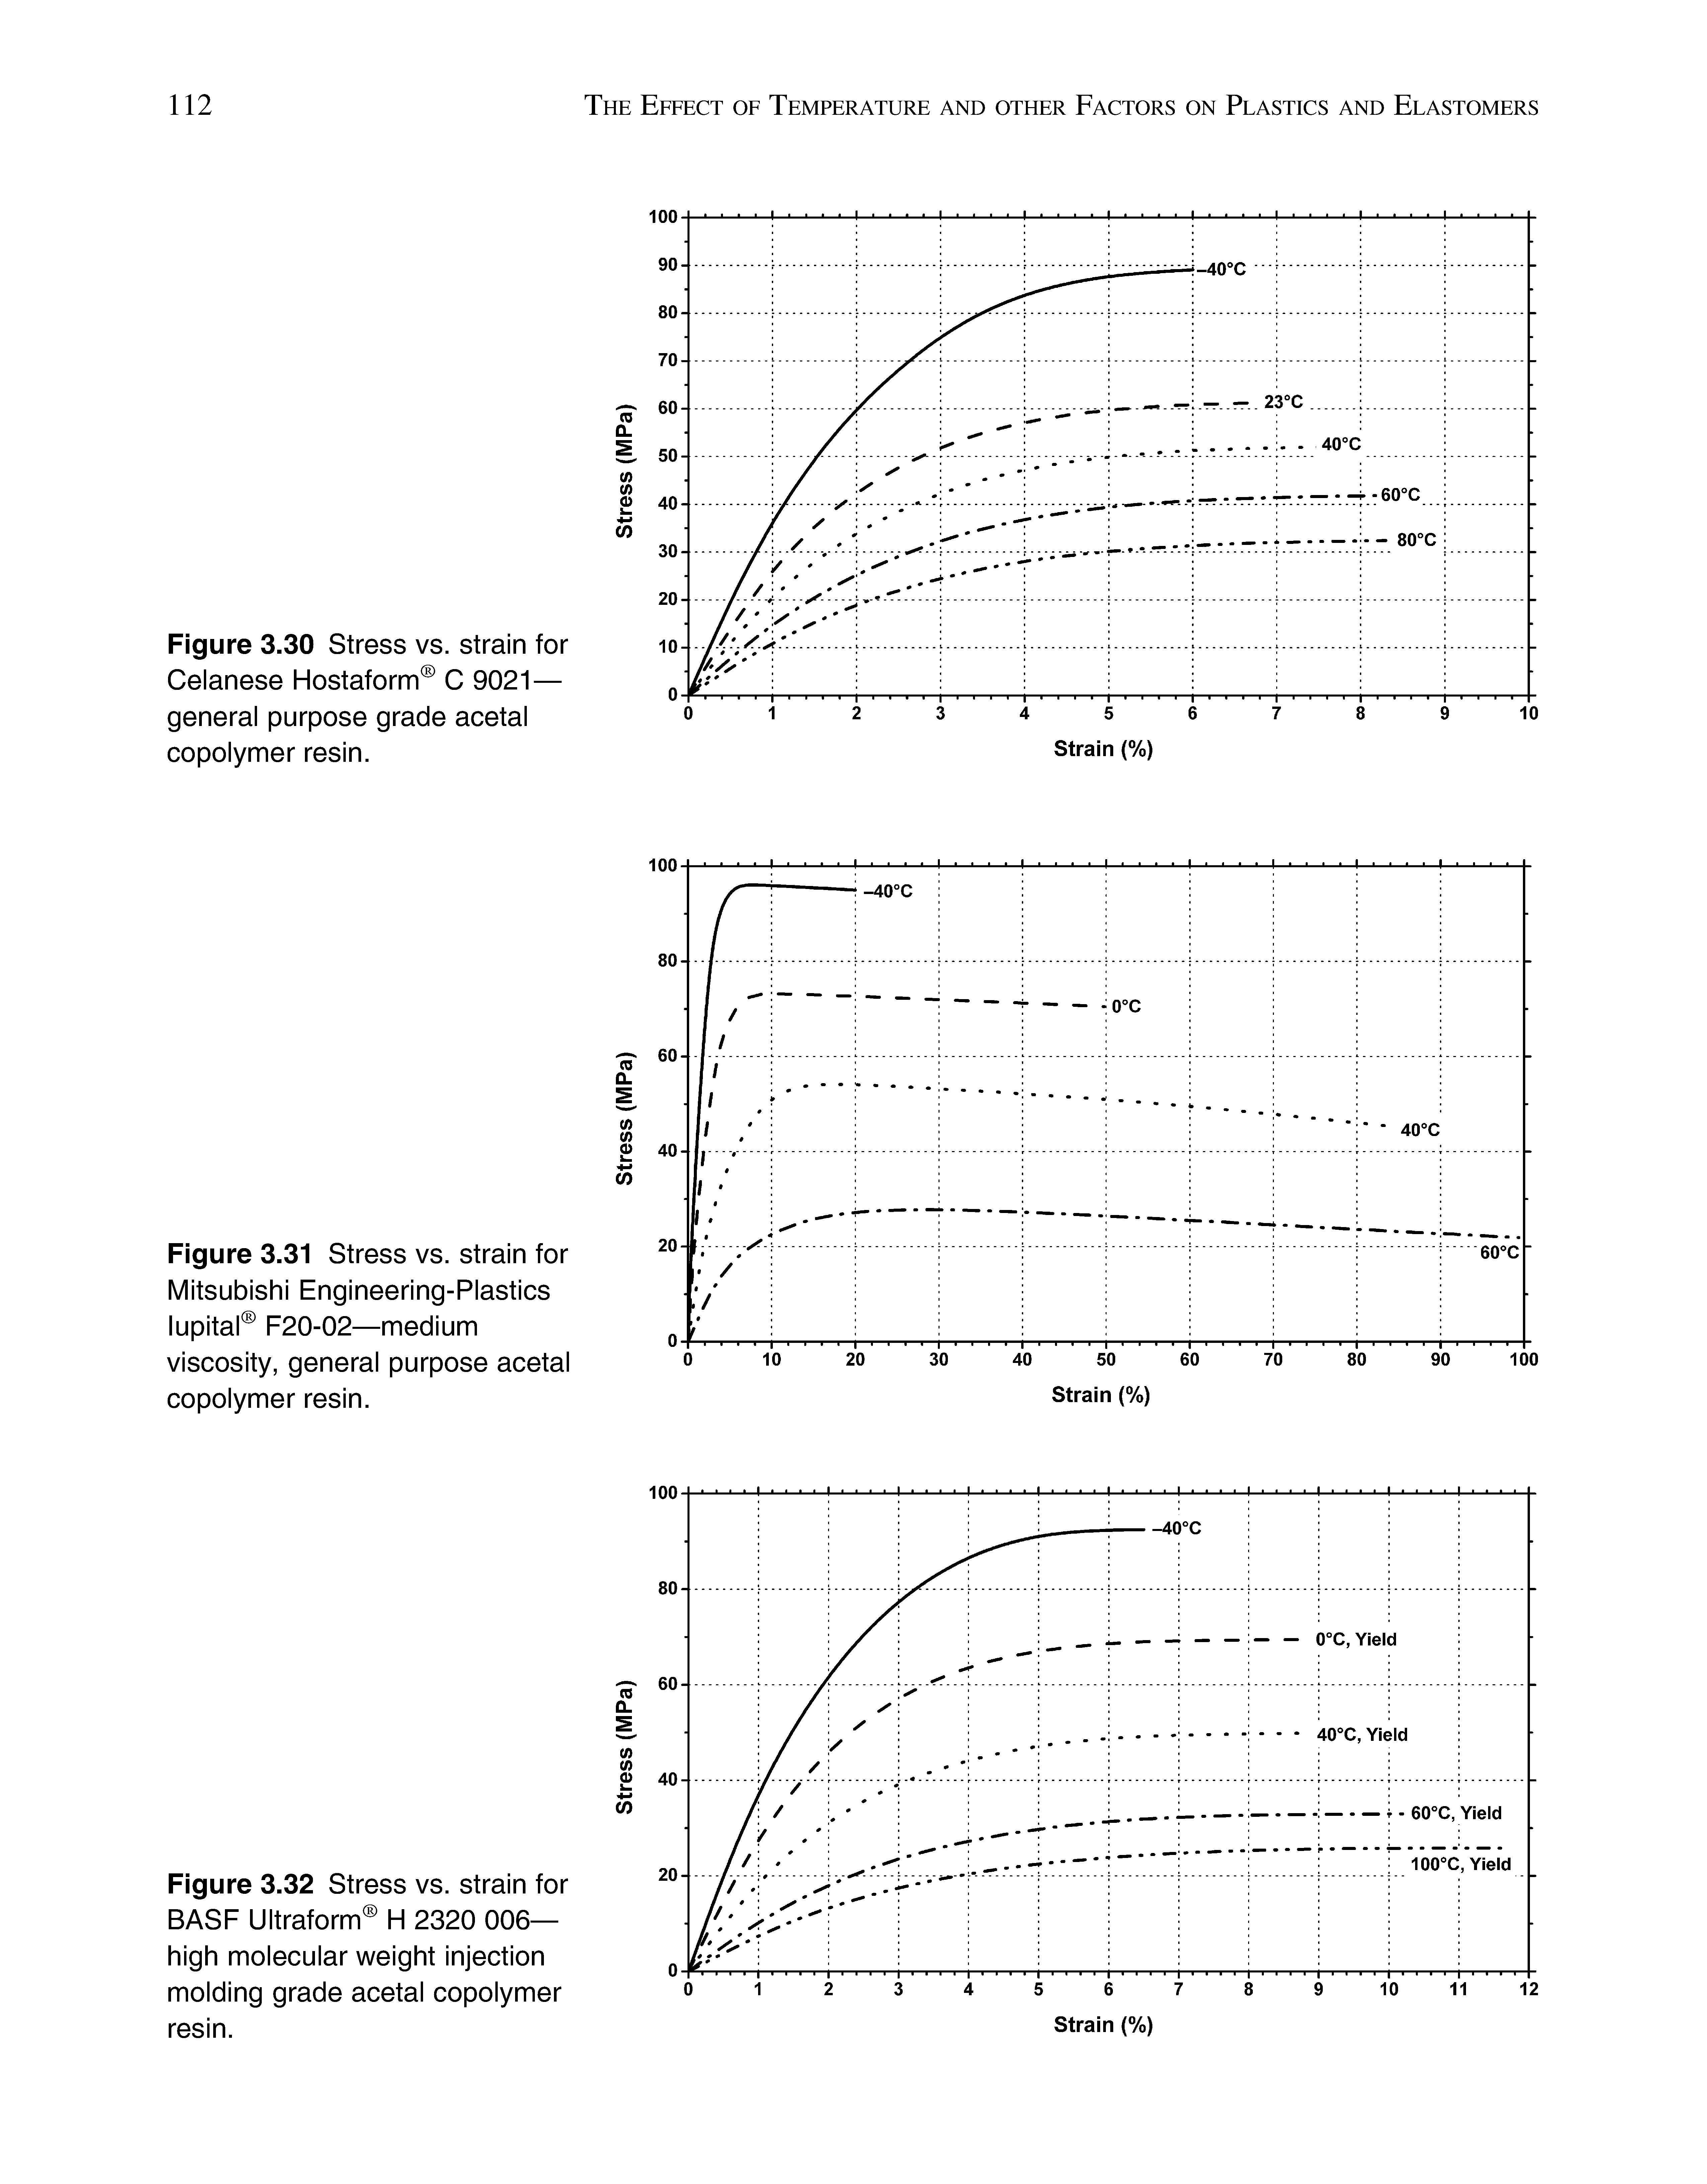 Figure 3.31 Stress vs. strain for Mitsubishi Engineering-Plastics lupital F20-02—medium viscosity, general purpose acetal copolymer resin.